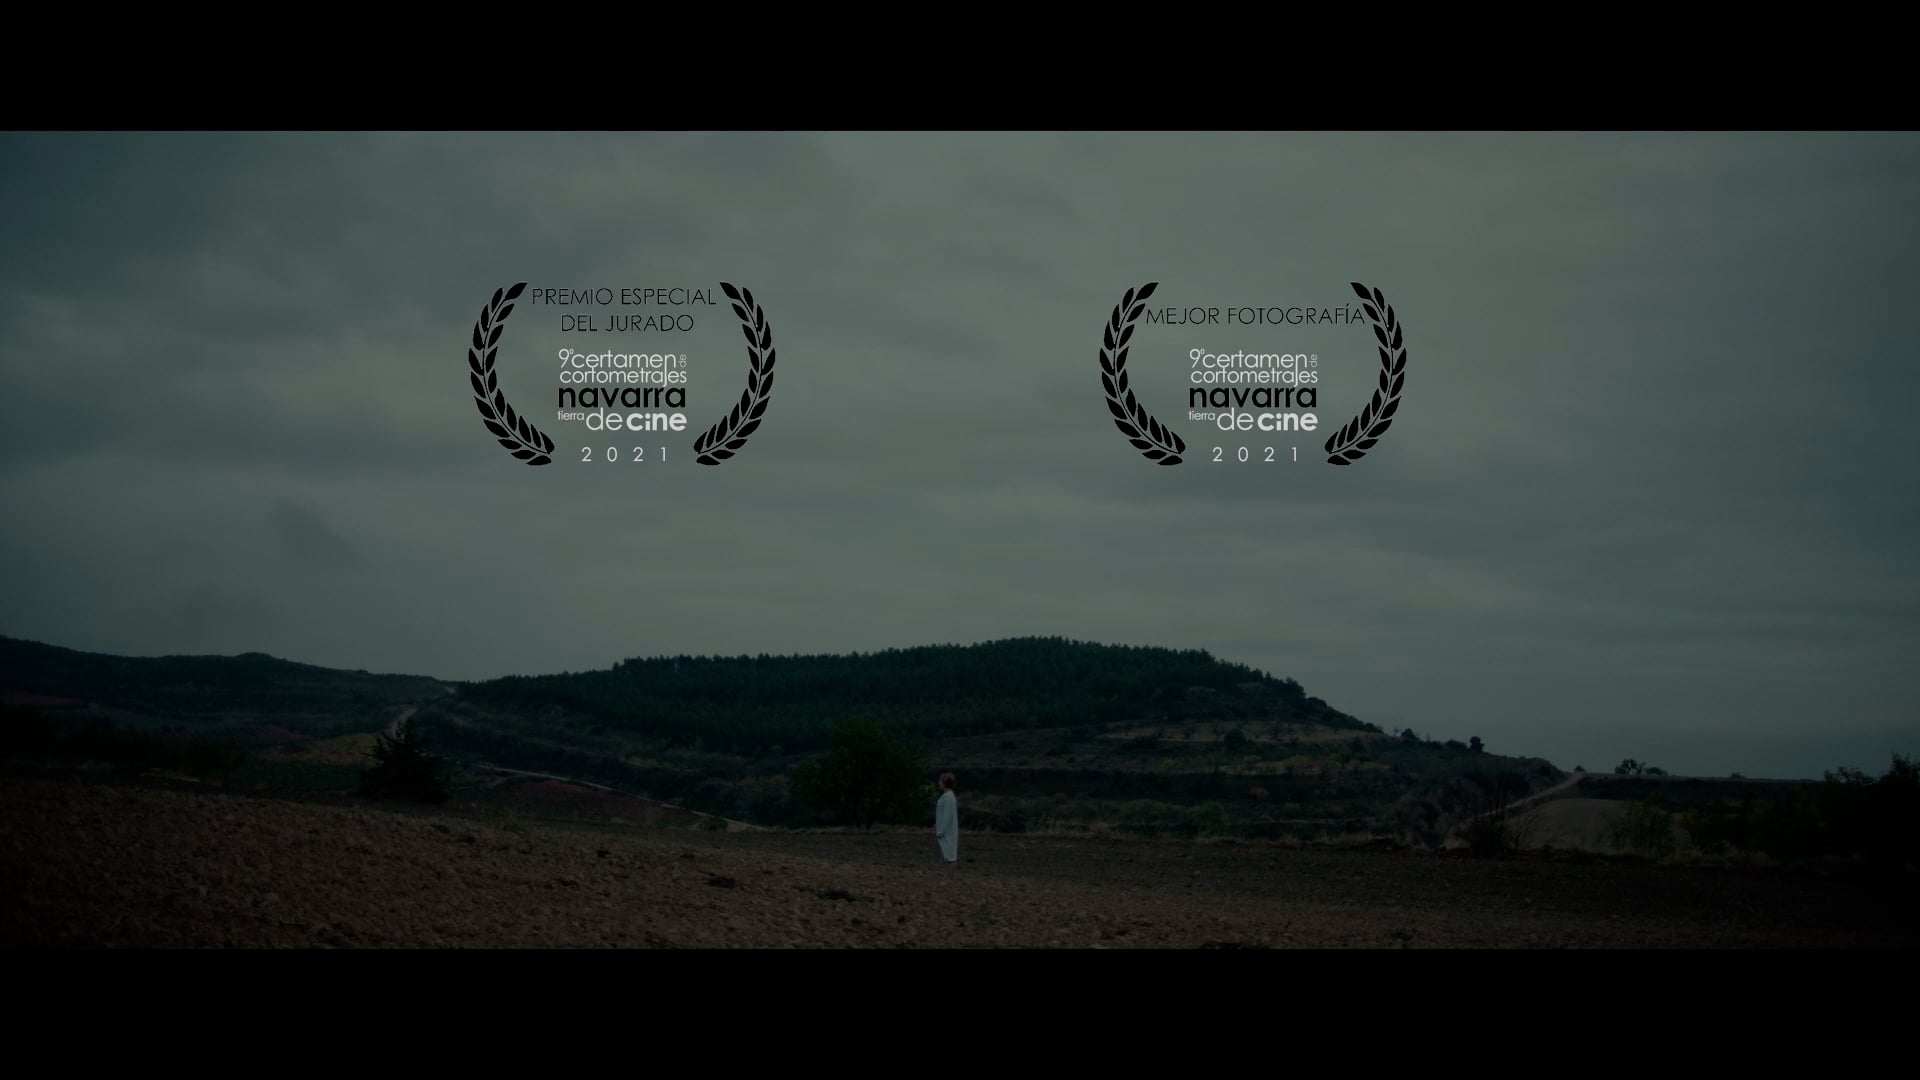 TRAILER - "Quitameriendas" ("Meadow Saffron") (Sergio Stendhal, 2021) - English subtitles